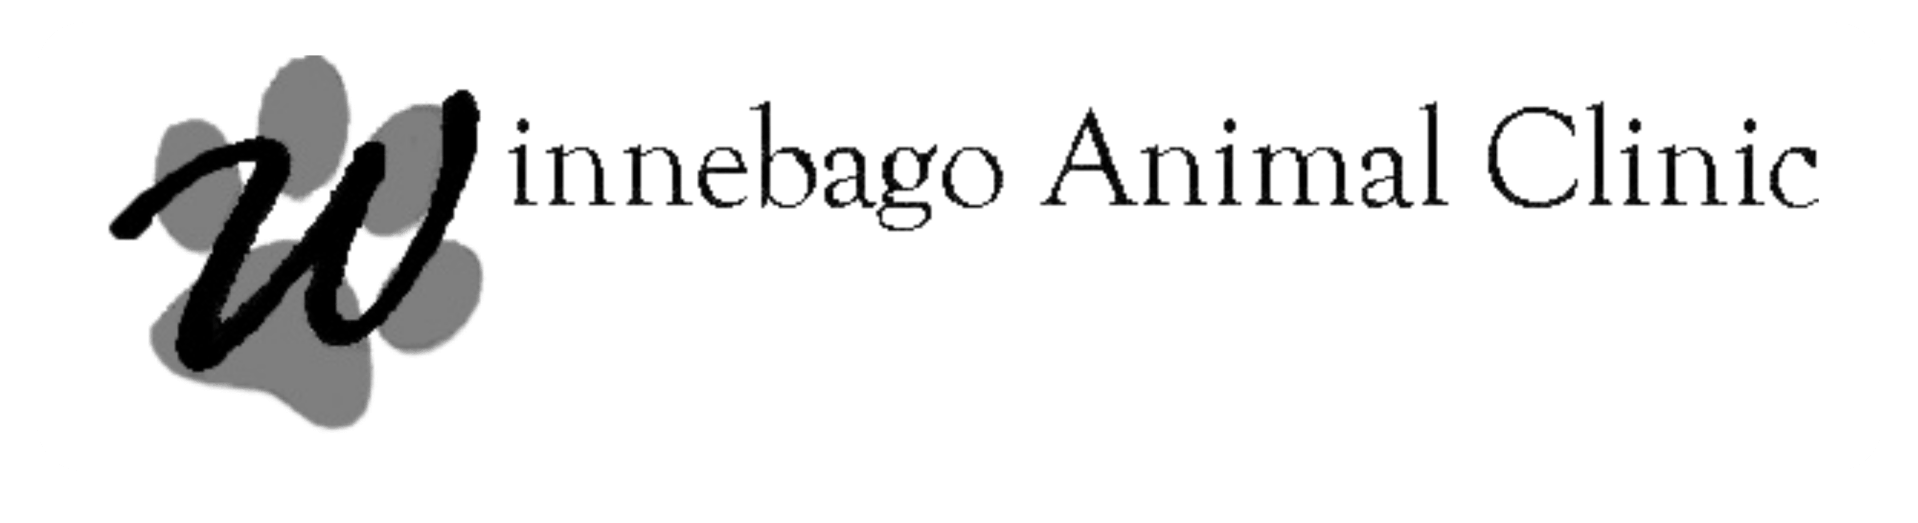 Winnebago Animal Clinic Logo